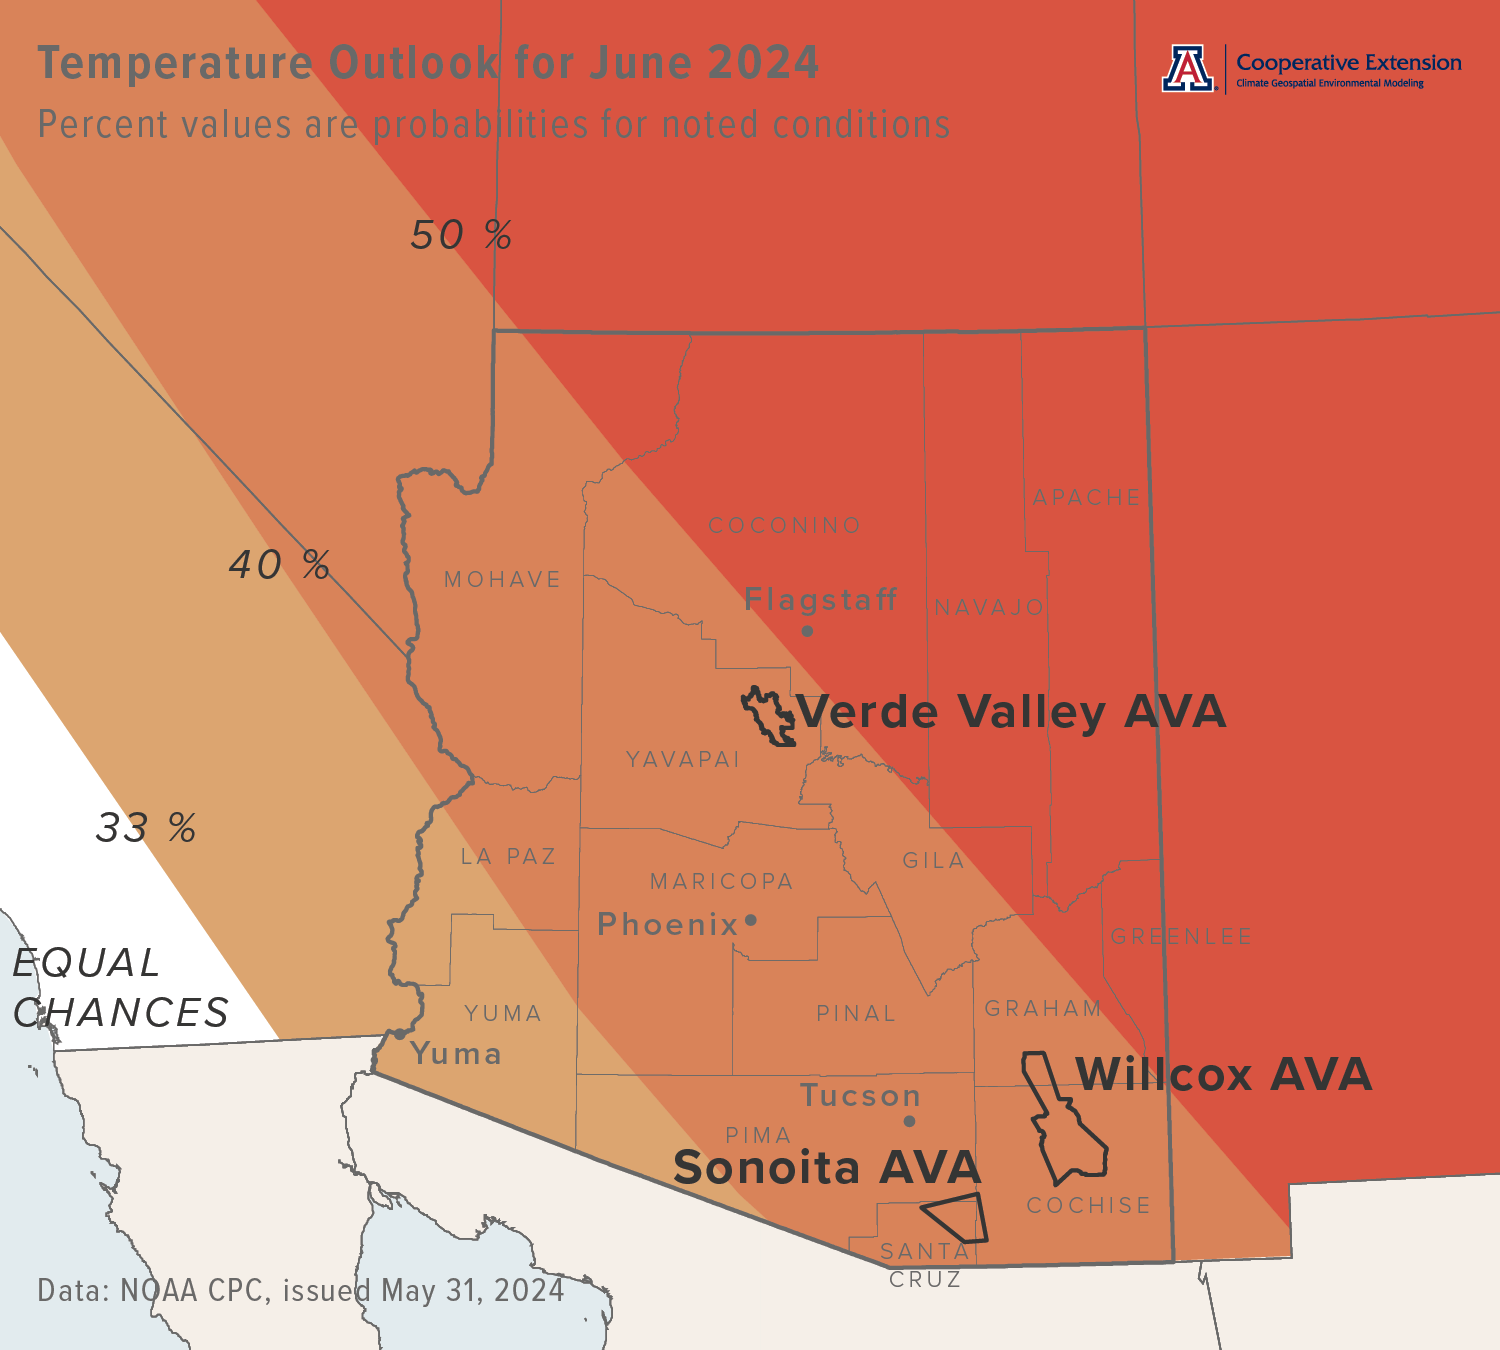 June 2024 temperature outlook map for Arizona